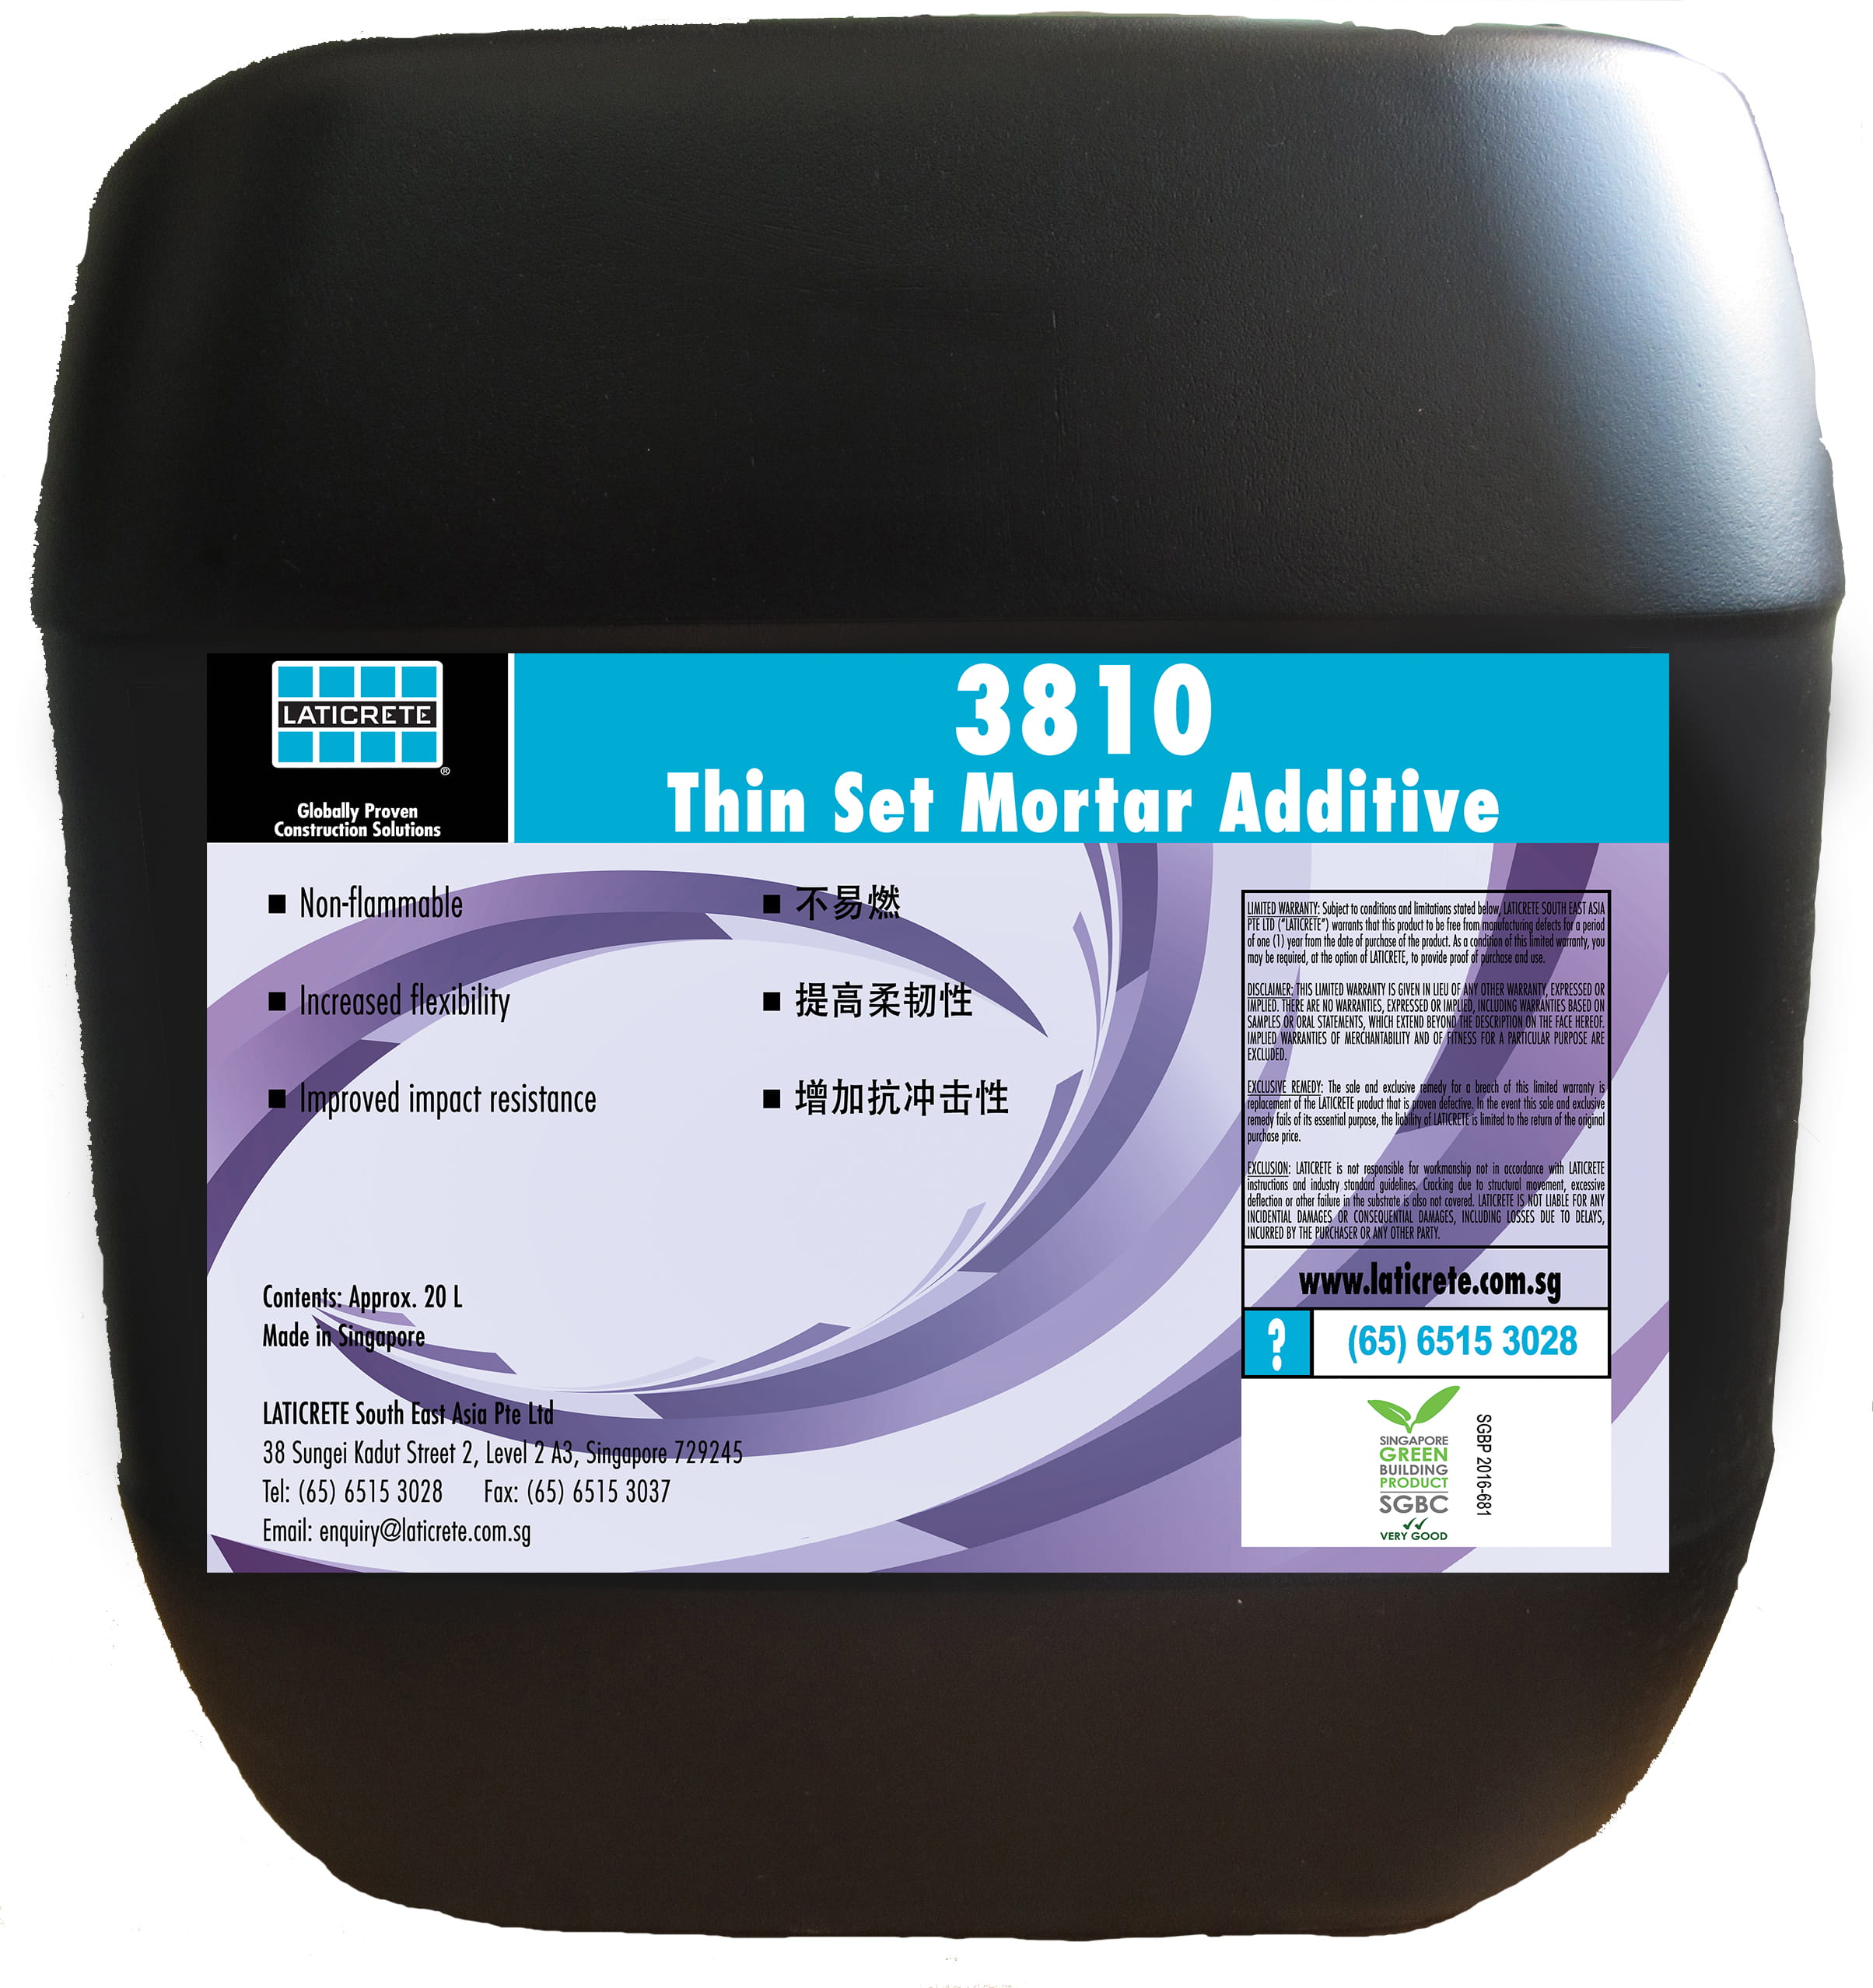 3810 Thin Set Mortar Additive